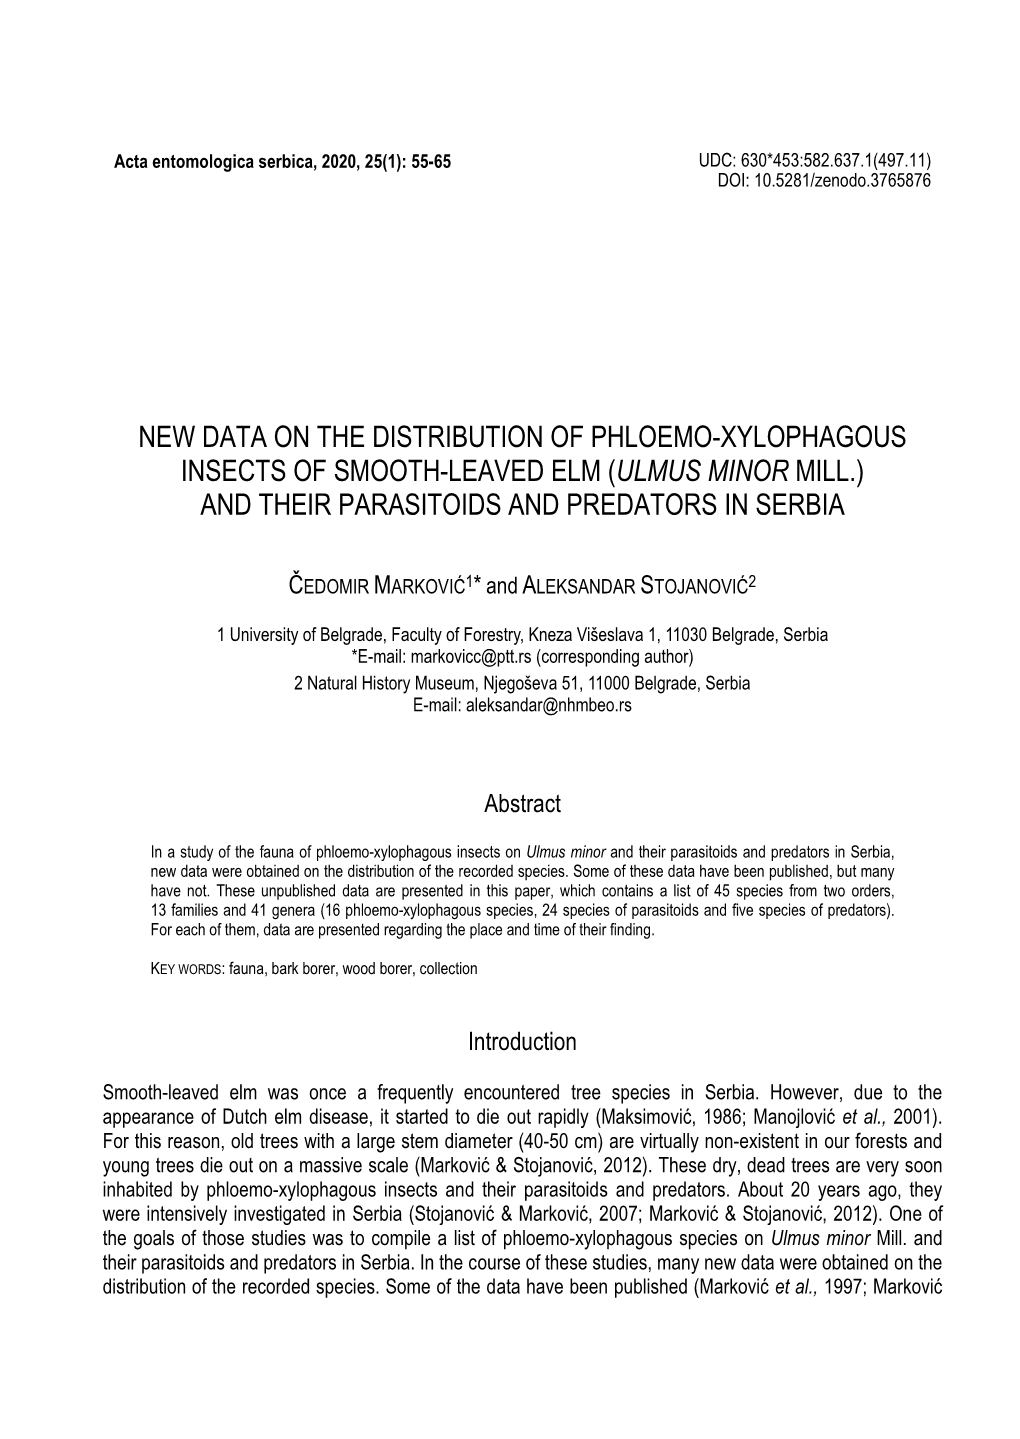 New Data on the Distribution of Phloemo-Xylophagous